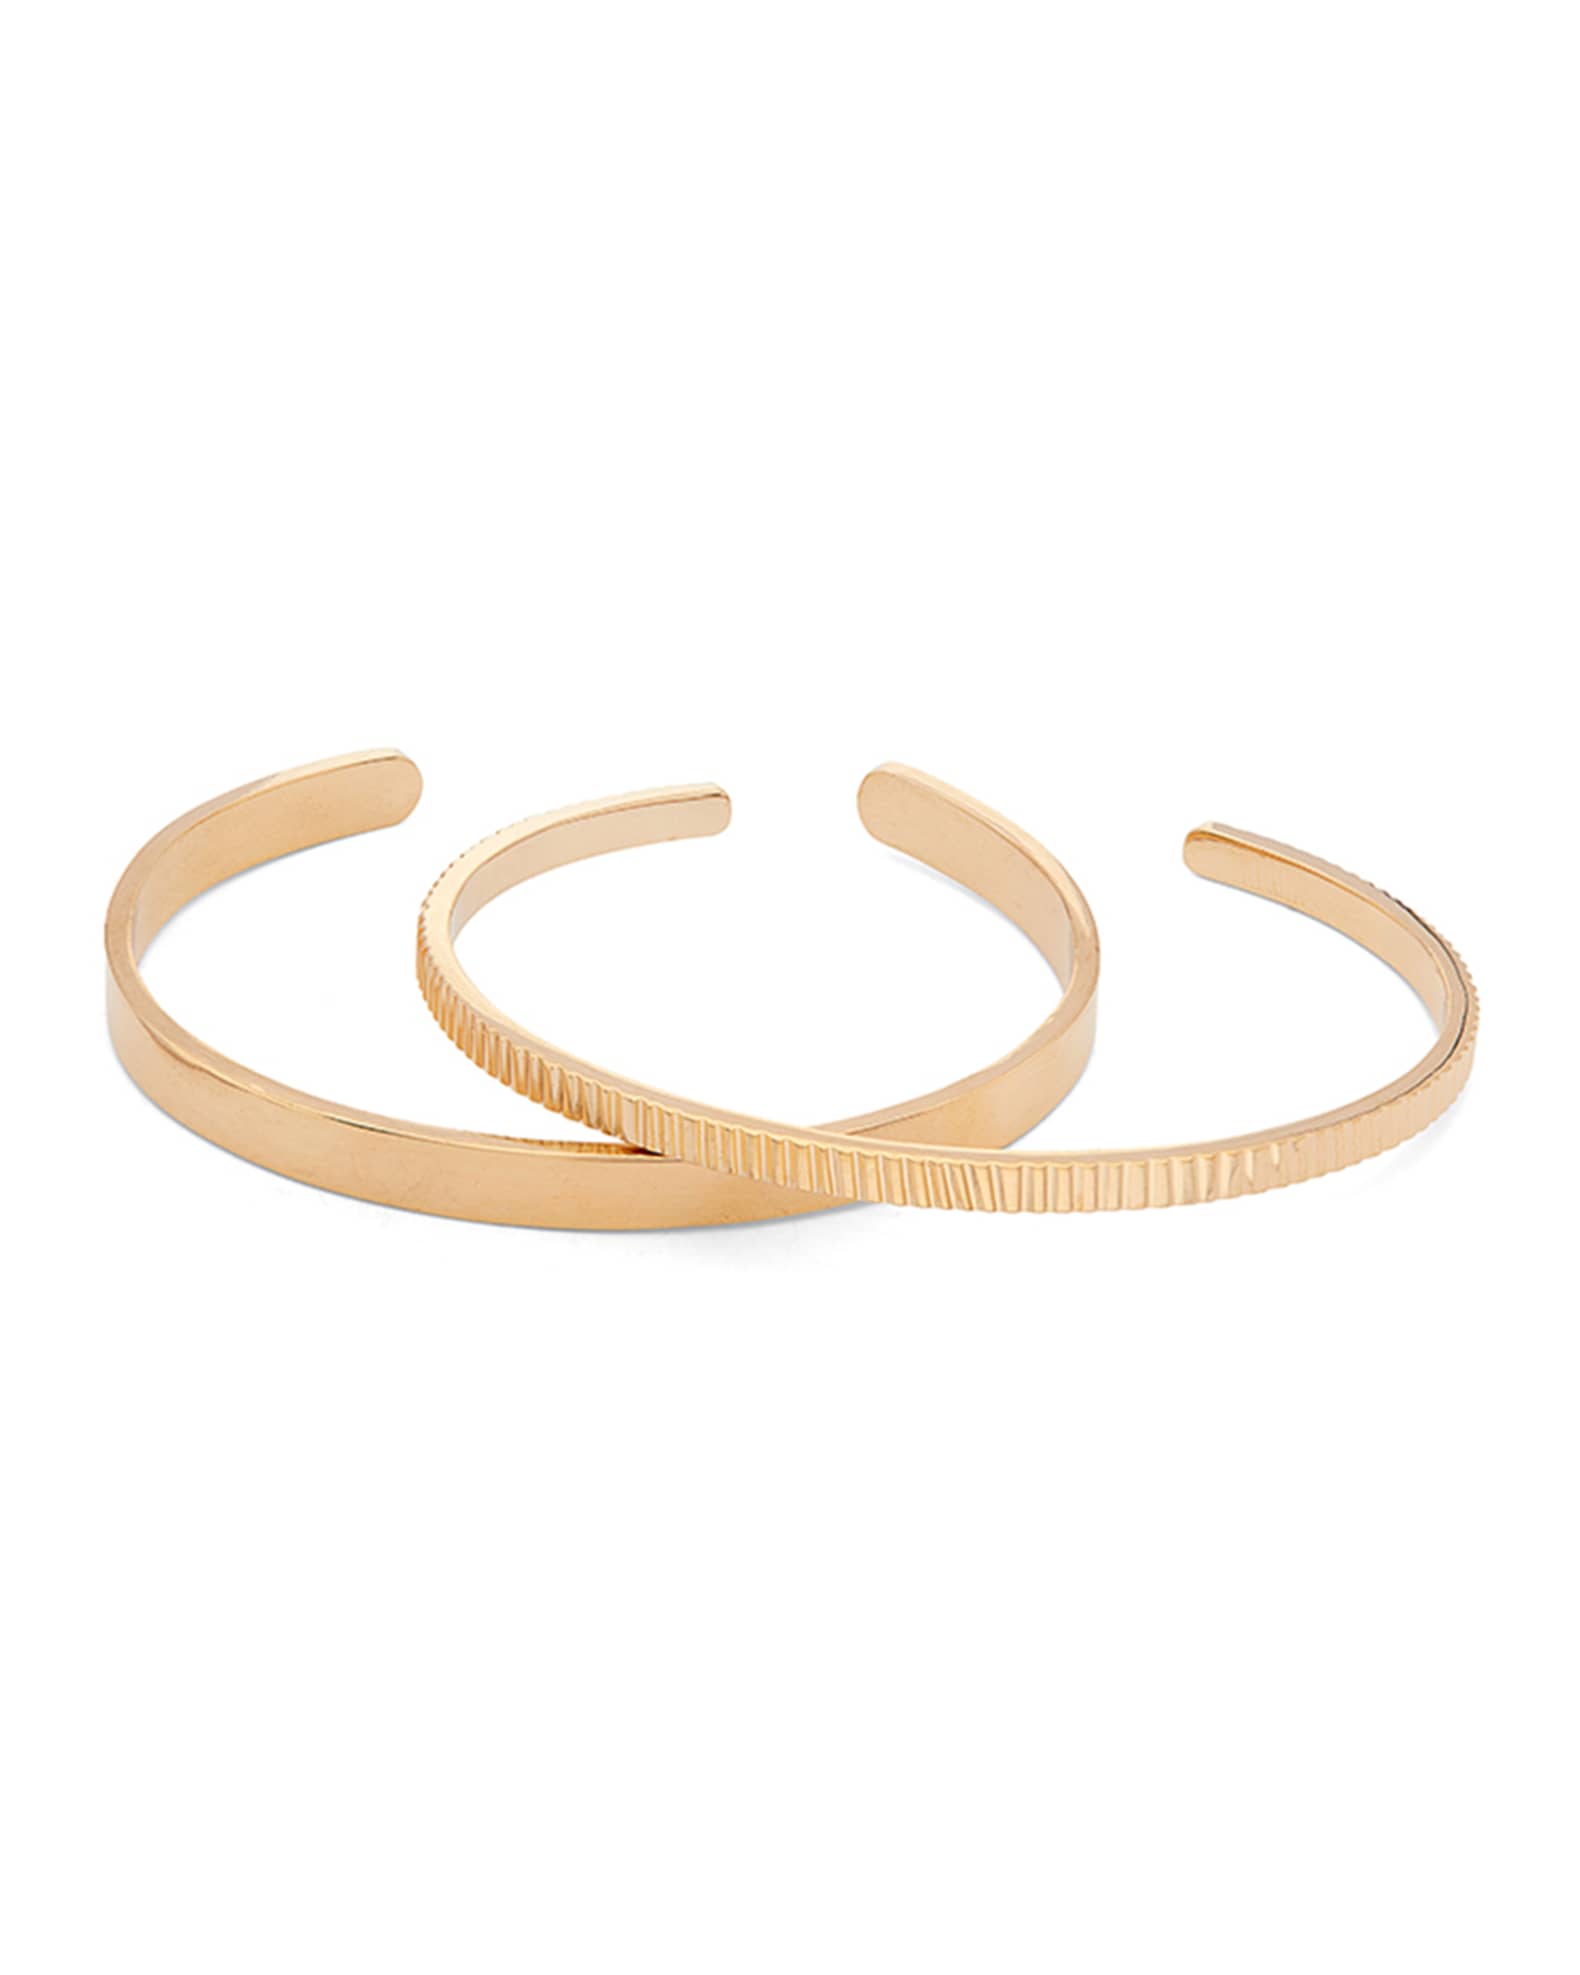 Soko Meta Stacking Cuff Bracelets, Set of 2, Size S/M and M/L, Gold, Women's, M / L, Bracelets Cuff Bracelets